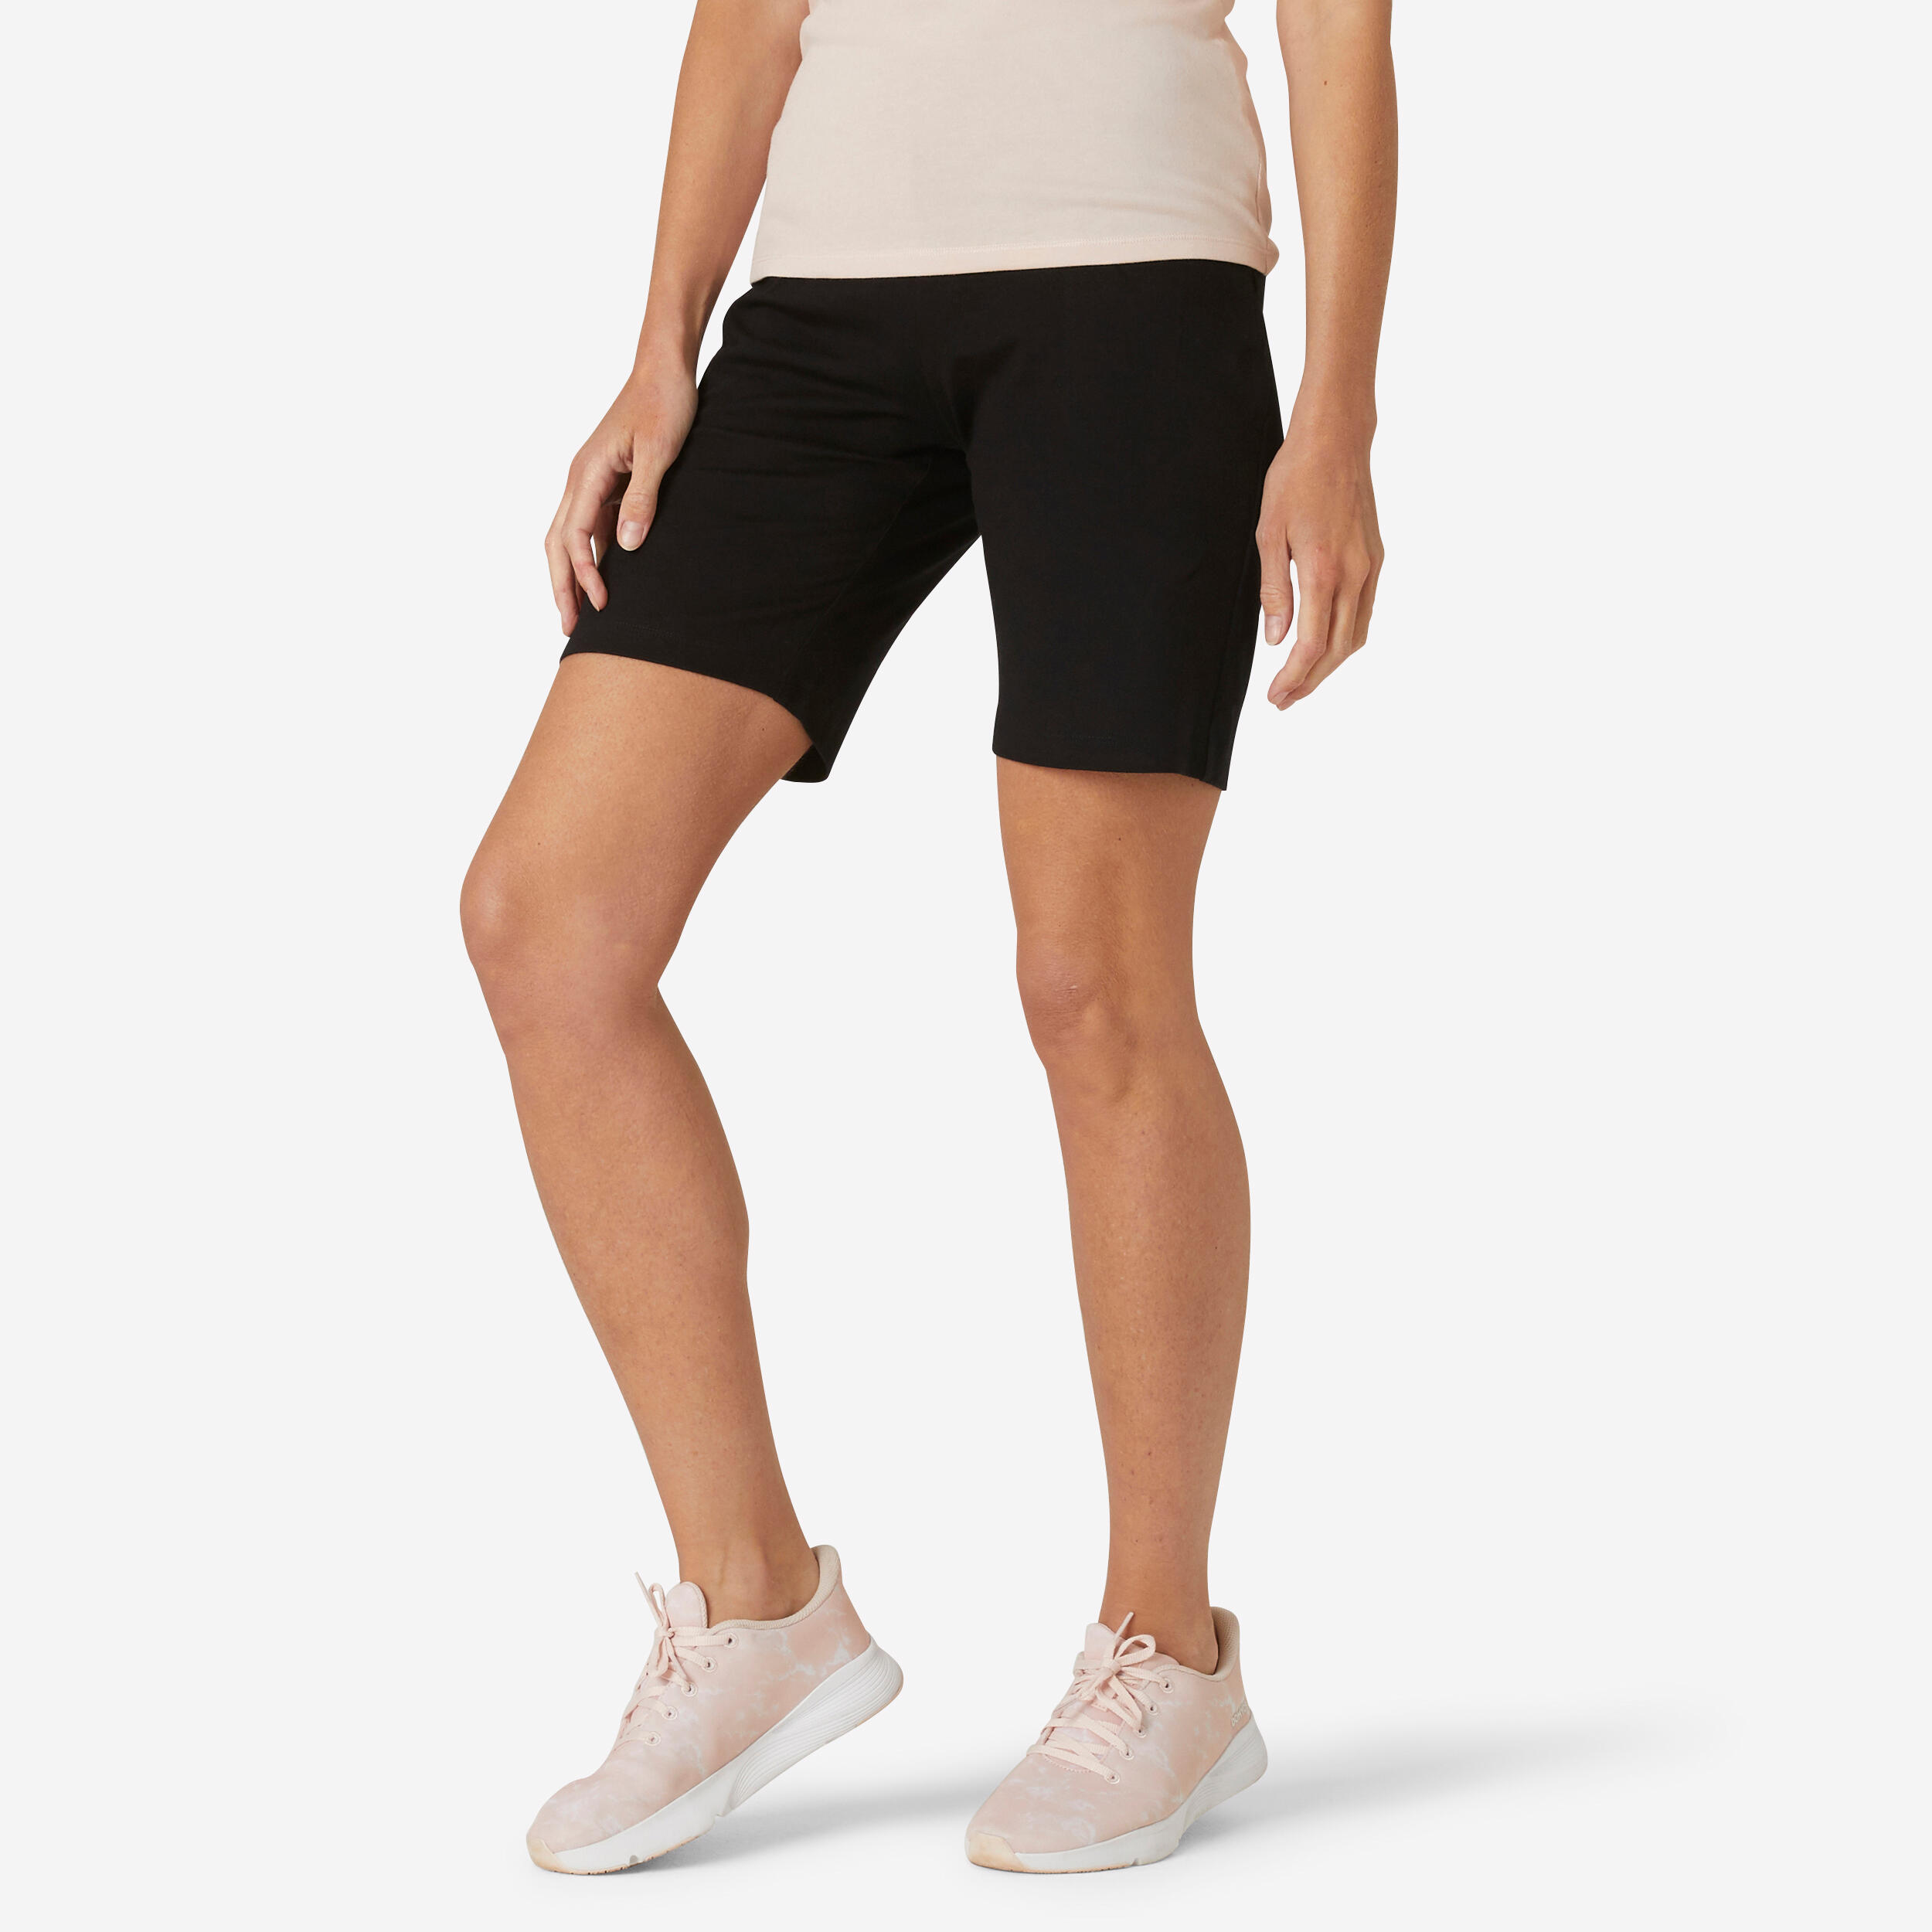 Women's 2-in-1 Fitness Cardio Shorts - Black DOMYOS